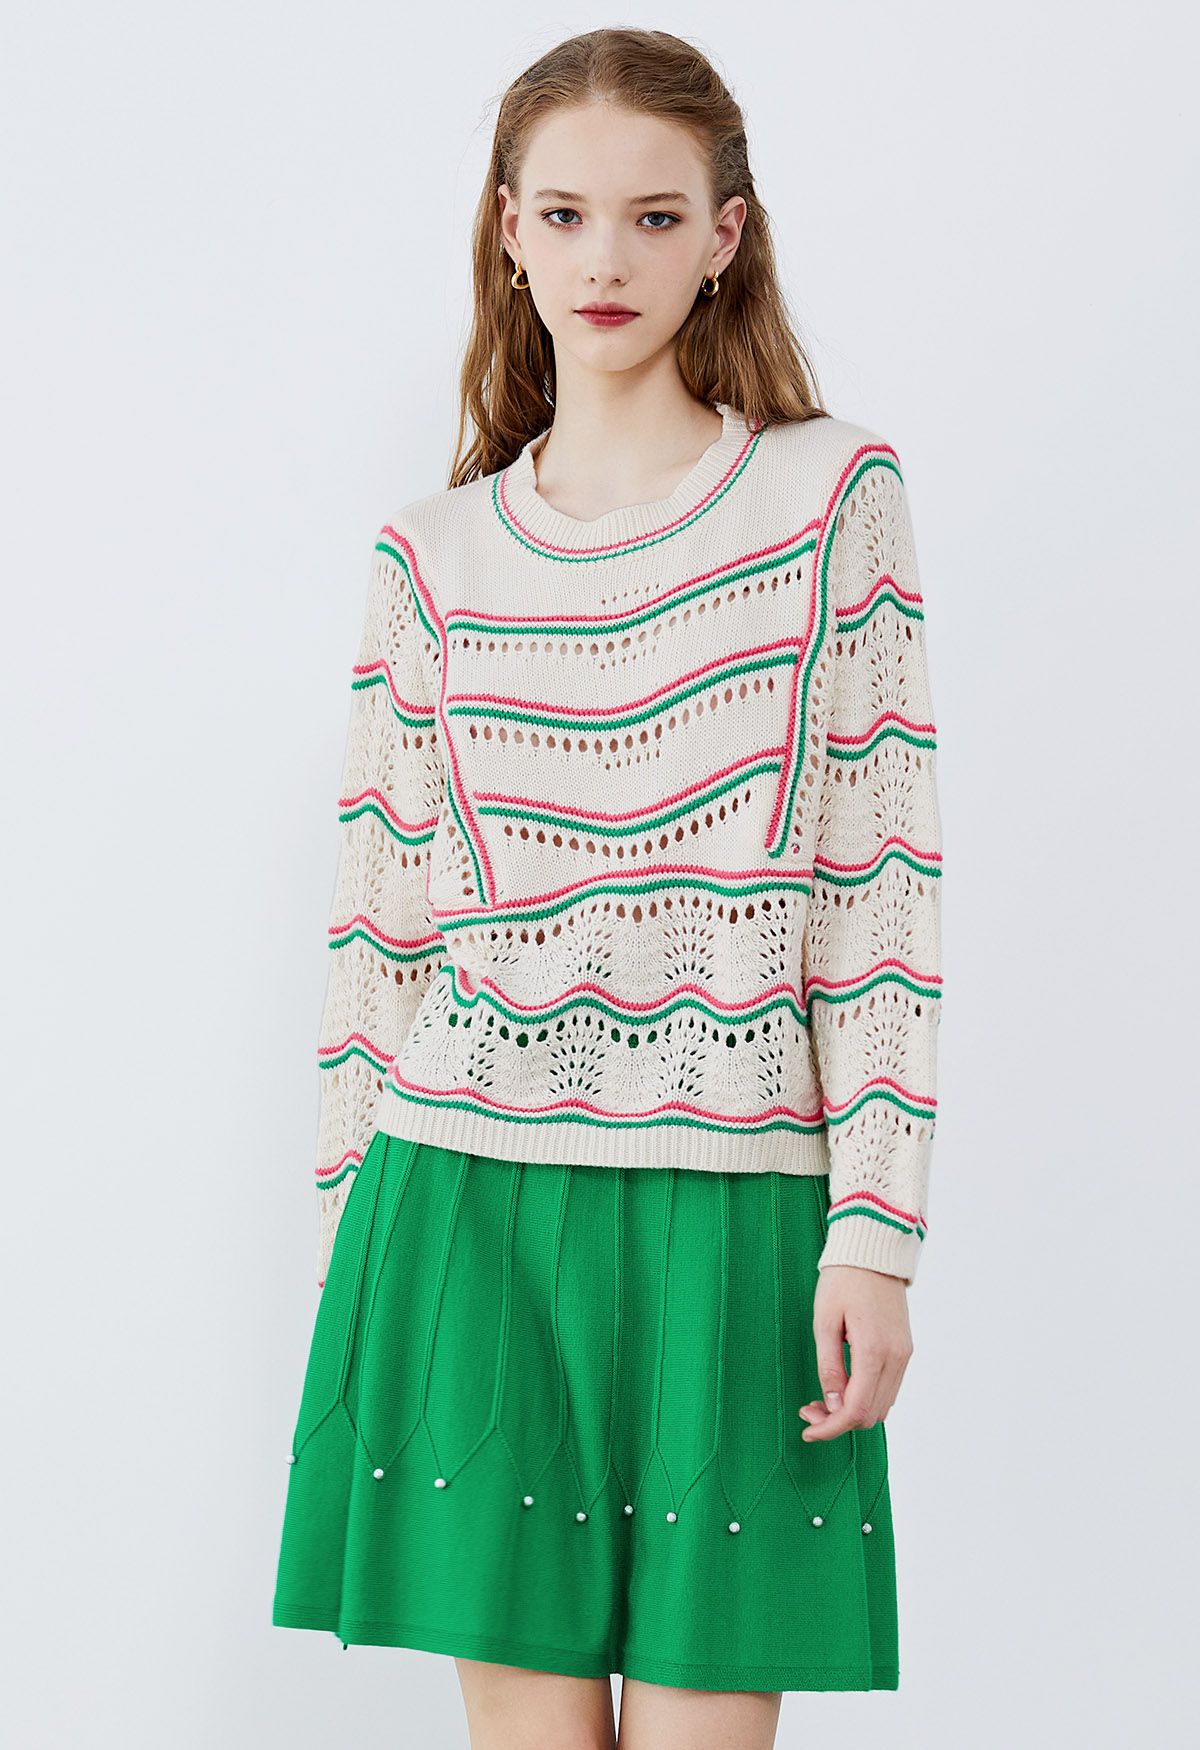 How To Crochet EASY BREEZY A-line Pearl Mini Skirt!